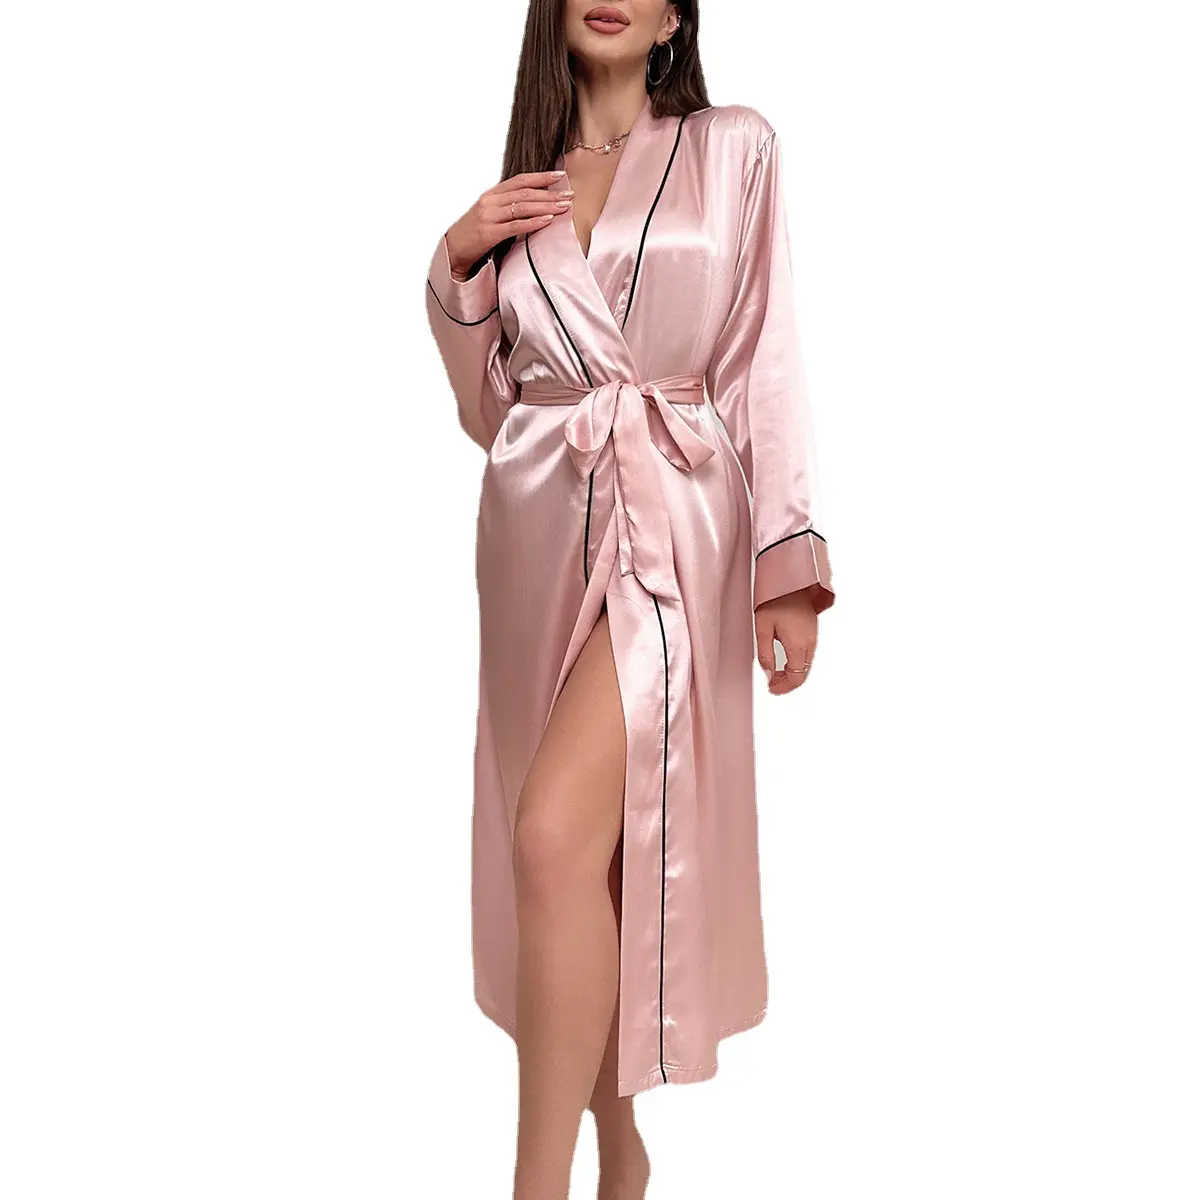 Luxury women's long sleeve satin pyjamas robe summer nightgown sleepwear smooth fabric for spring and autumn